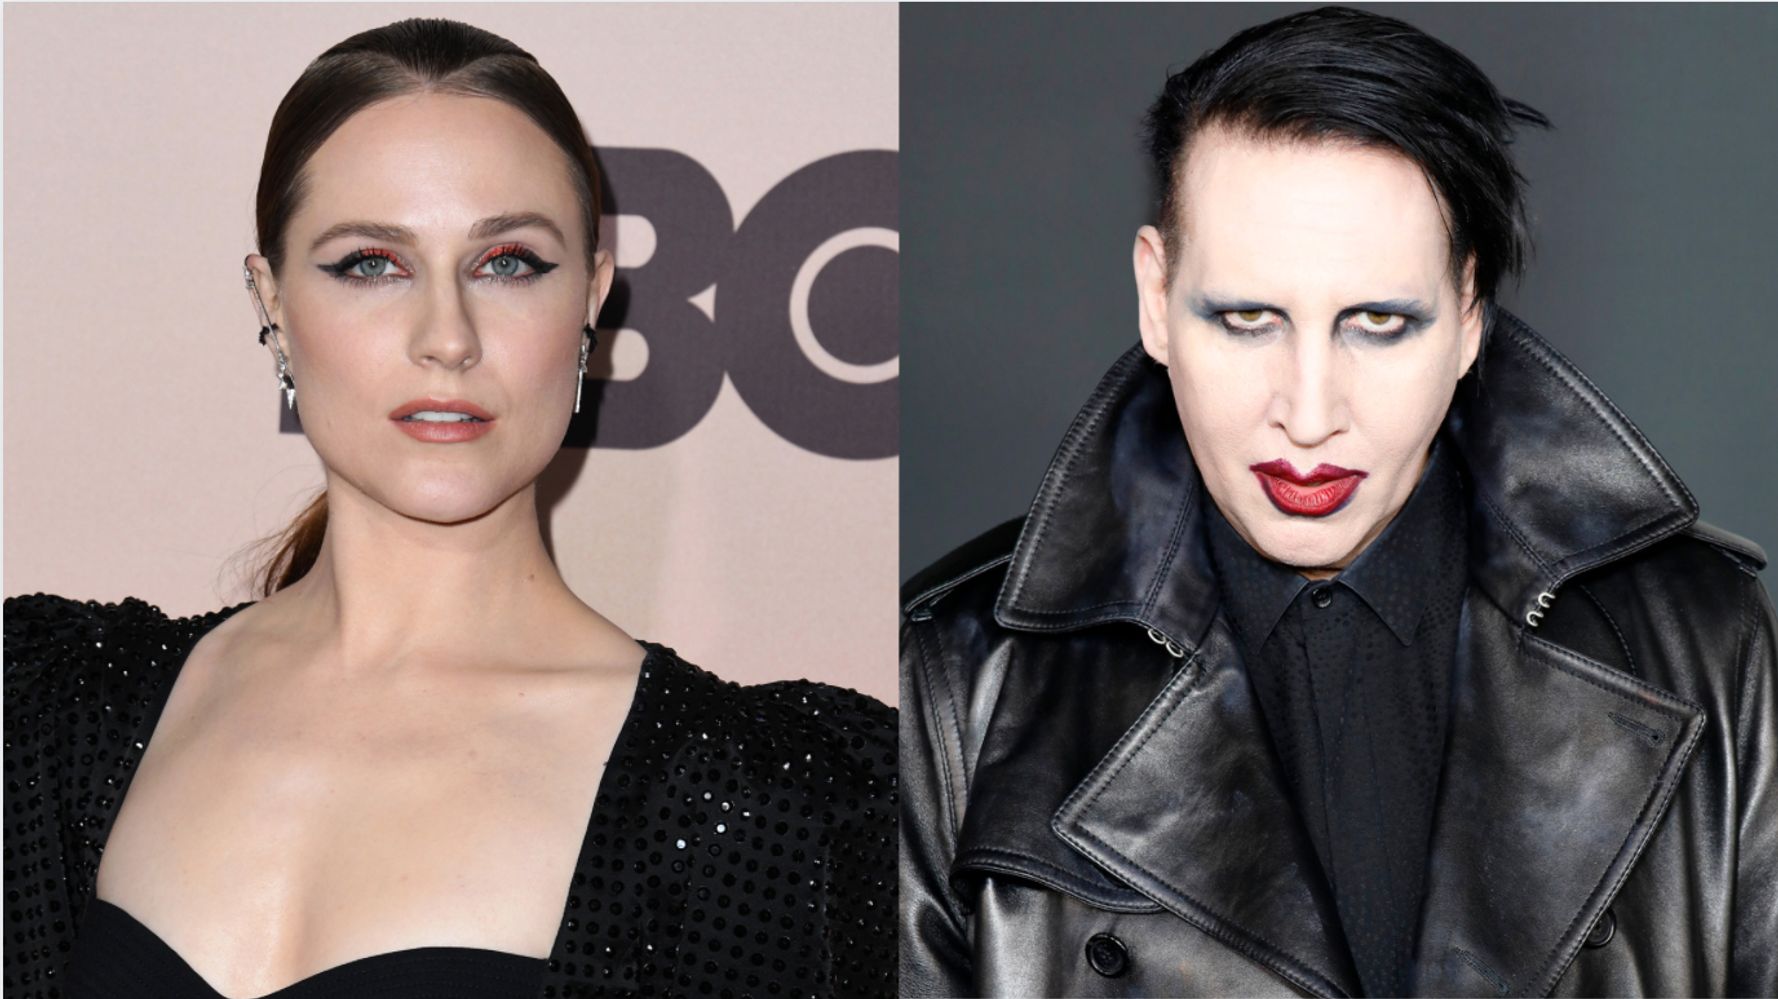 Evan Rachel Wood Flips Off Marilyn Manson After Kanye West 'Re-traumatized' Survivors